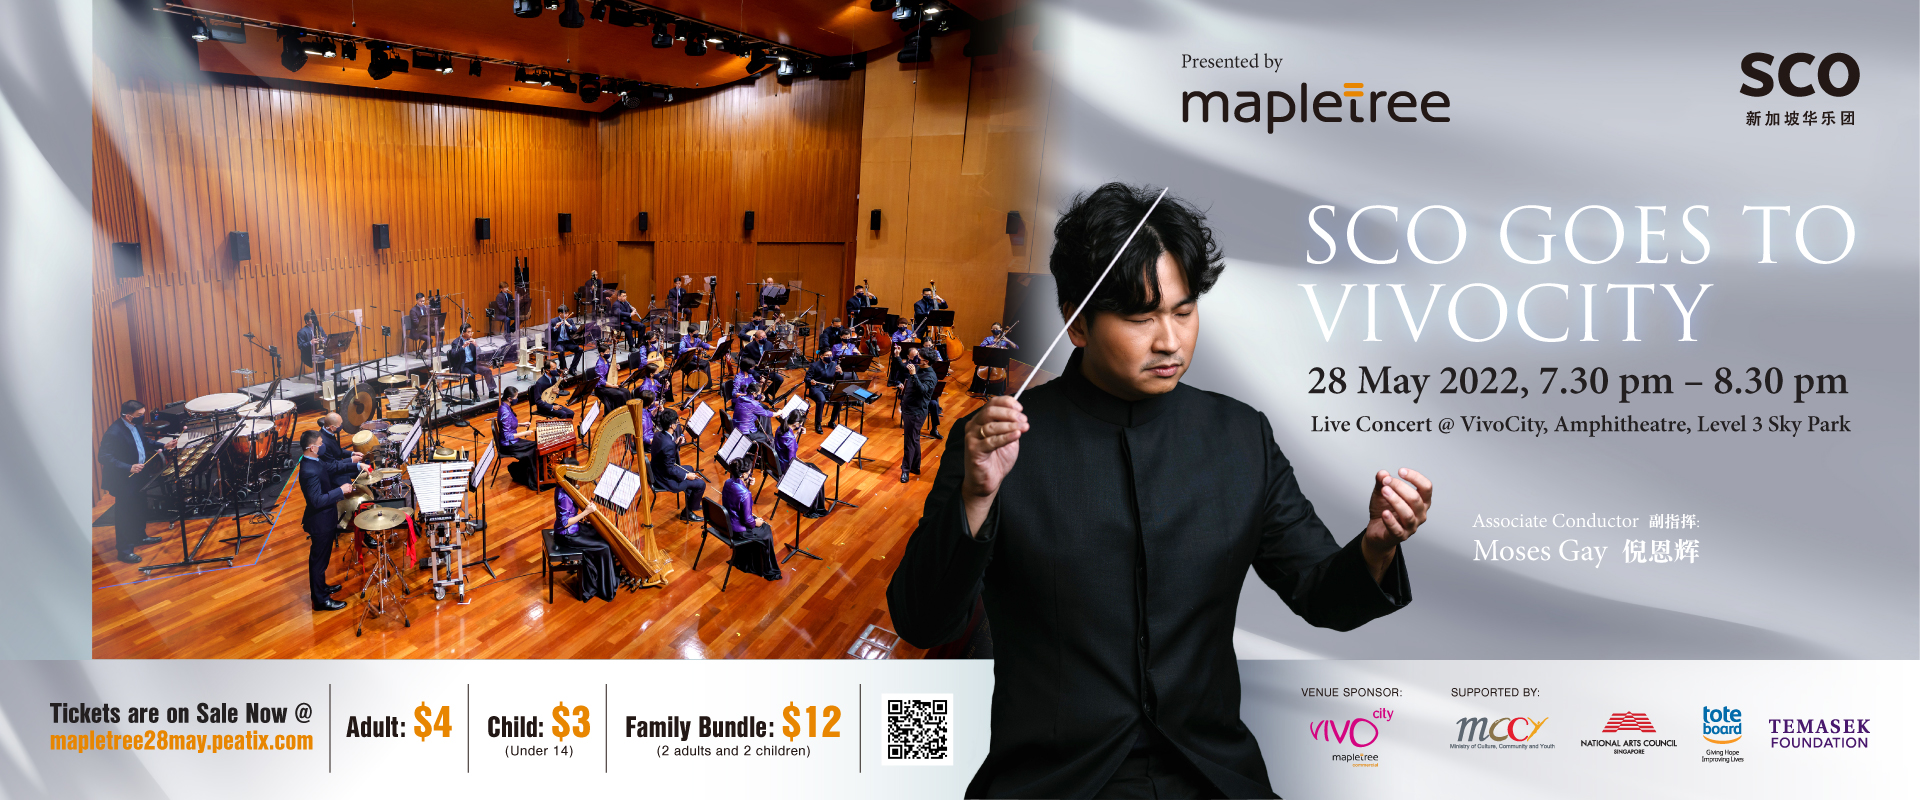 SCO_Mapletree_Concert_1920x800_3 2018-2019 Concert Season